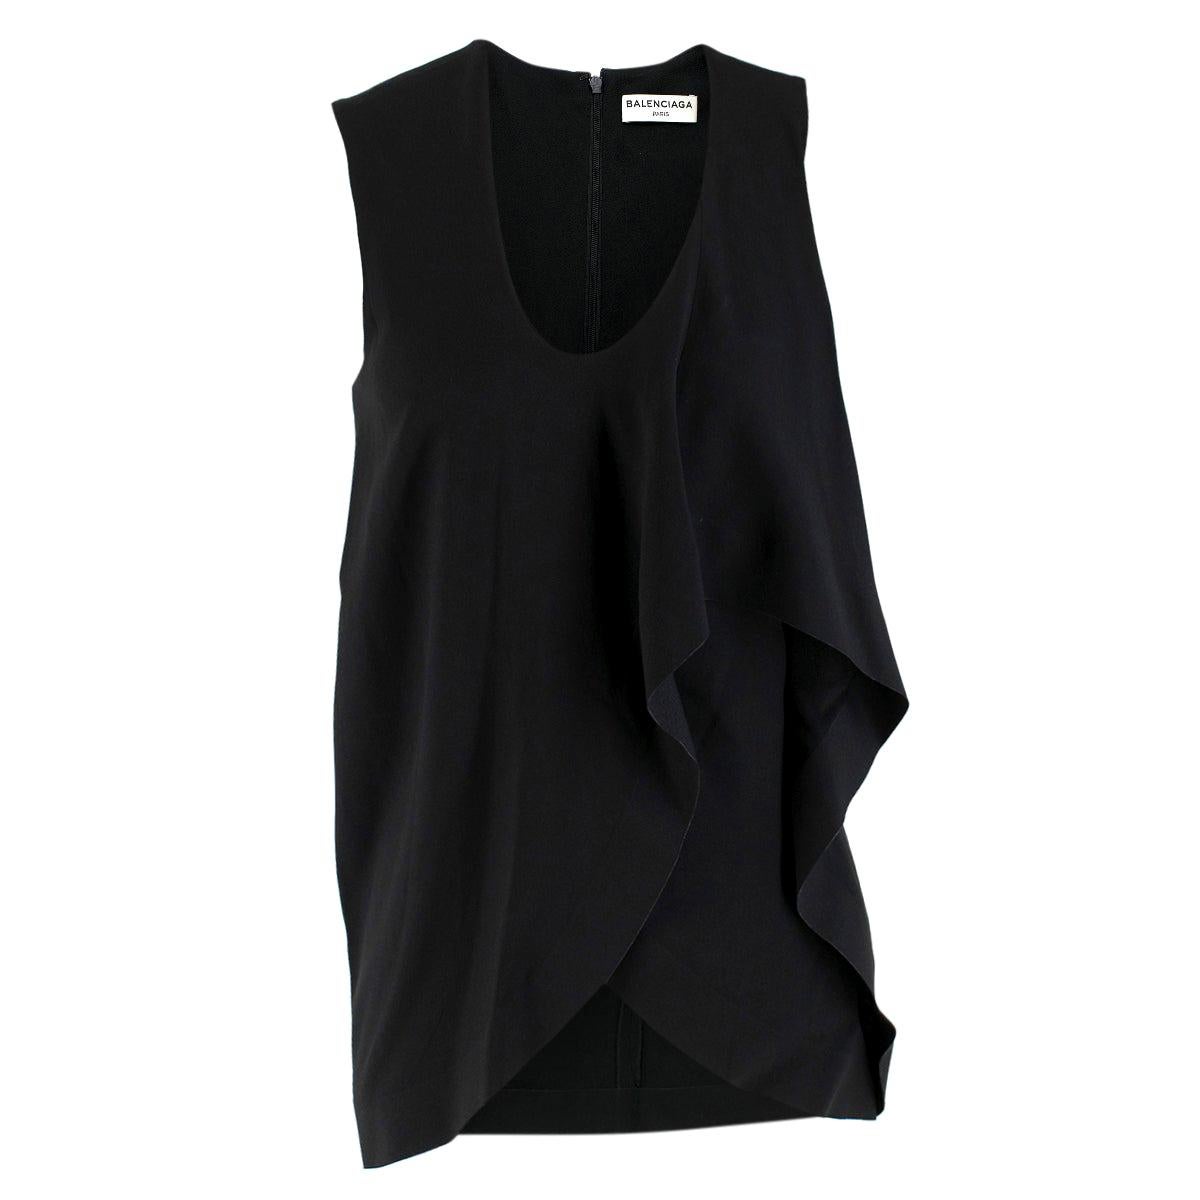 Balenciaga Black Draped Sleeveless Top - Size US 4